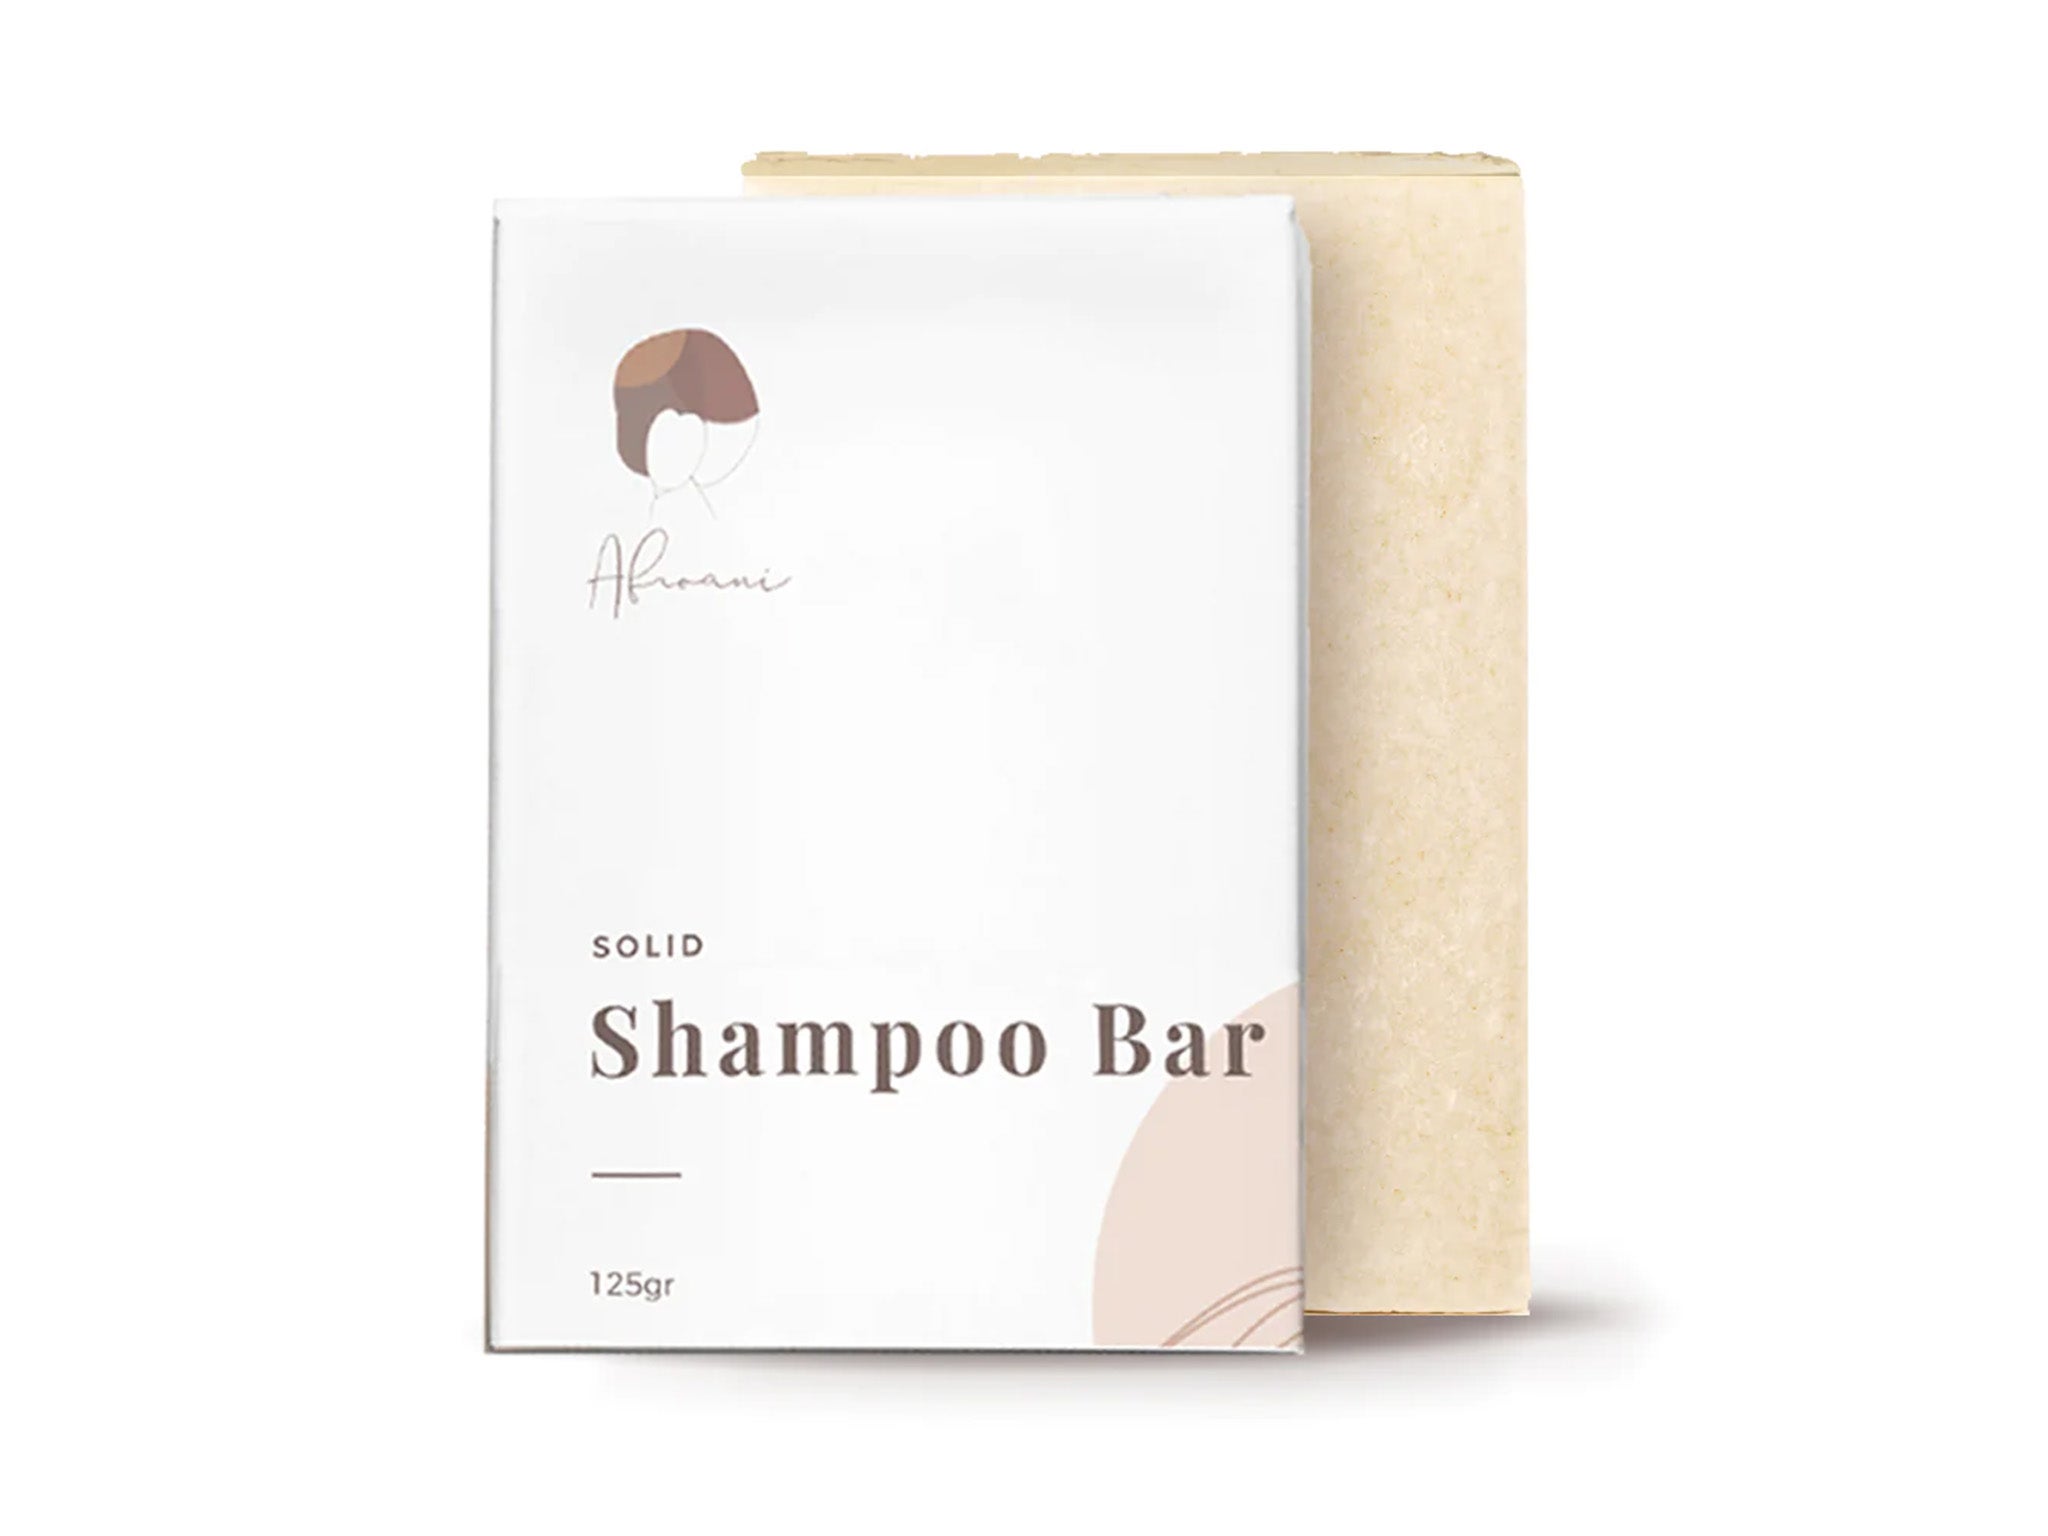 Afroani solid shampoo bar